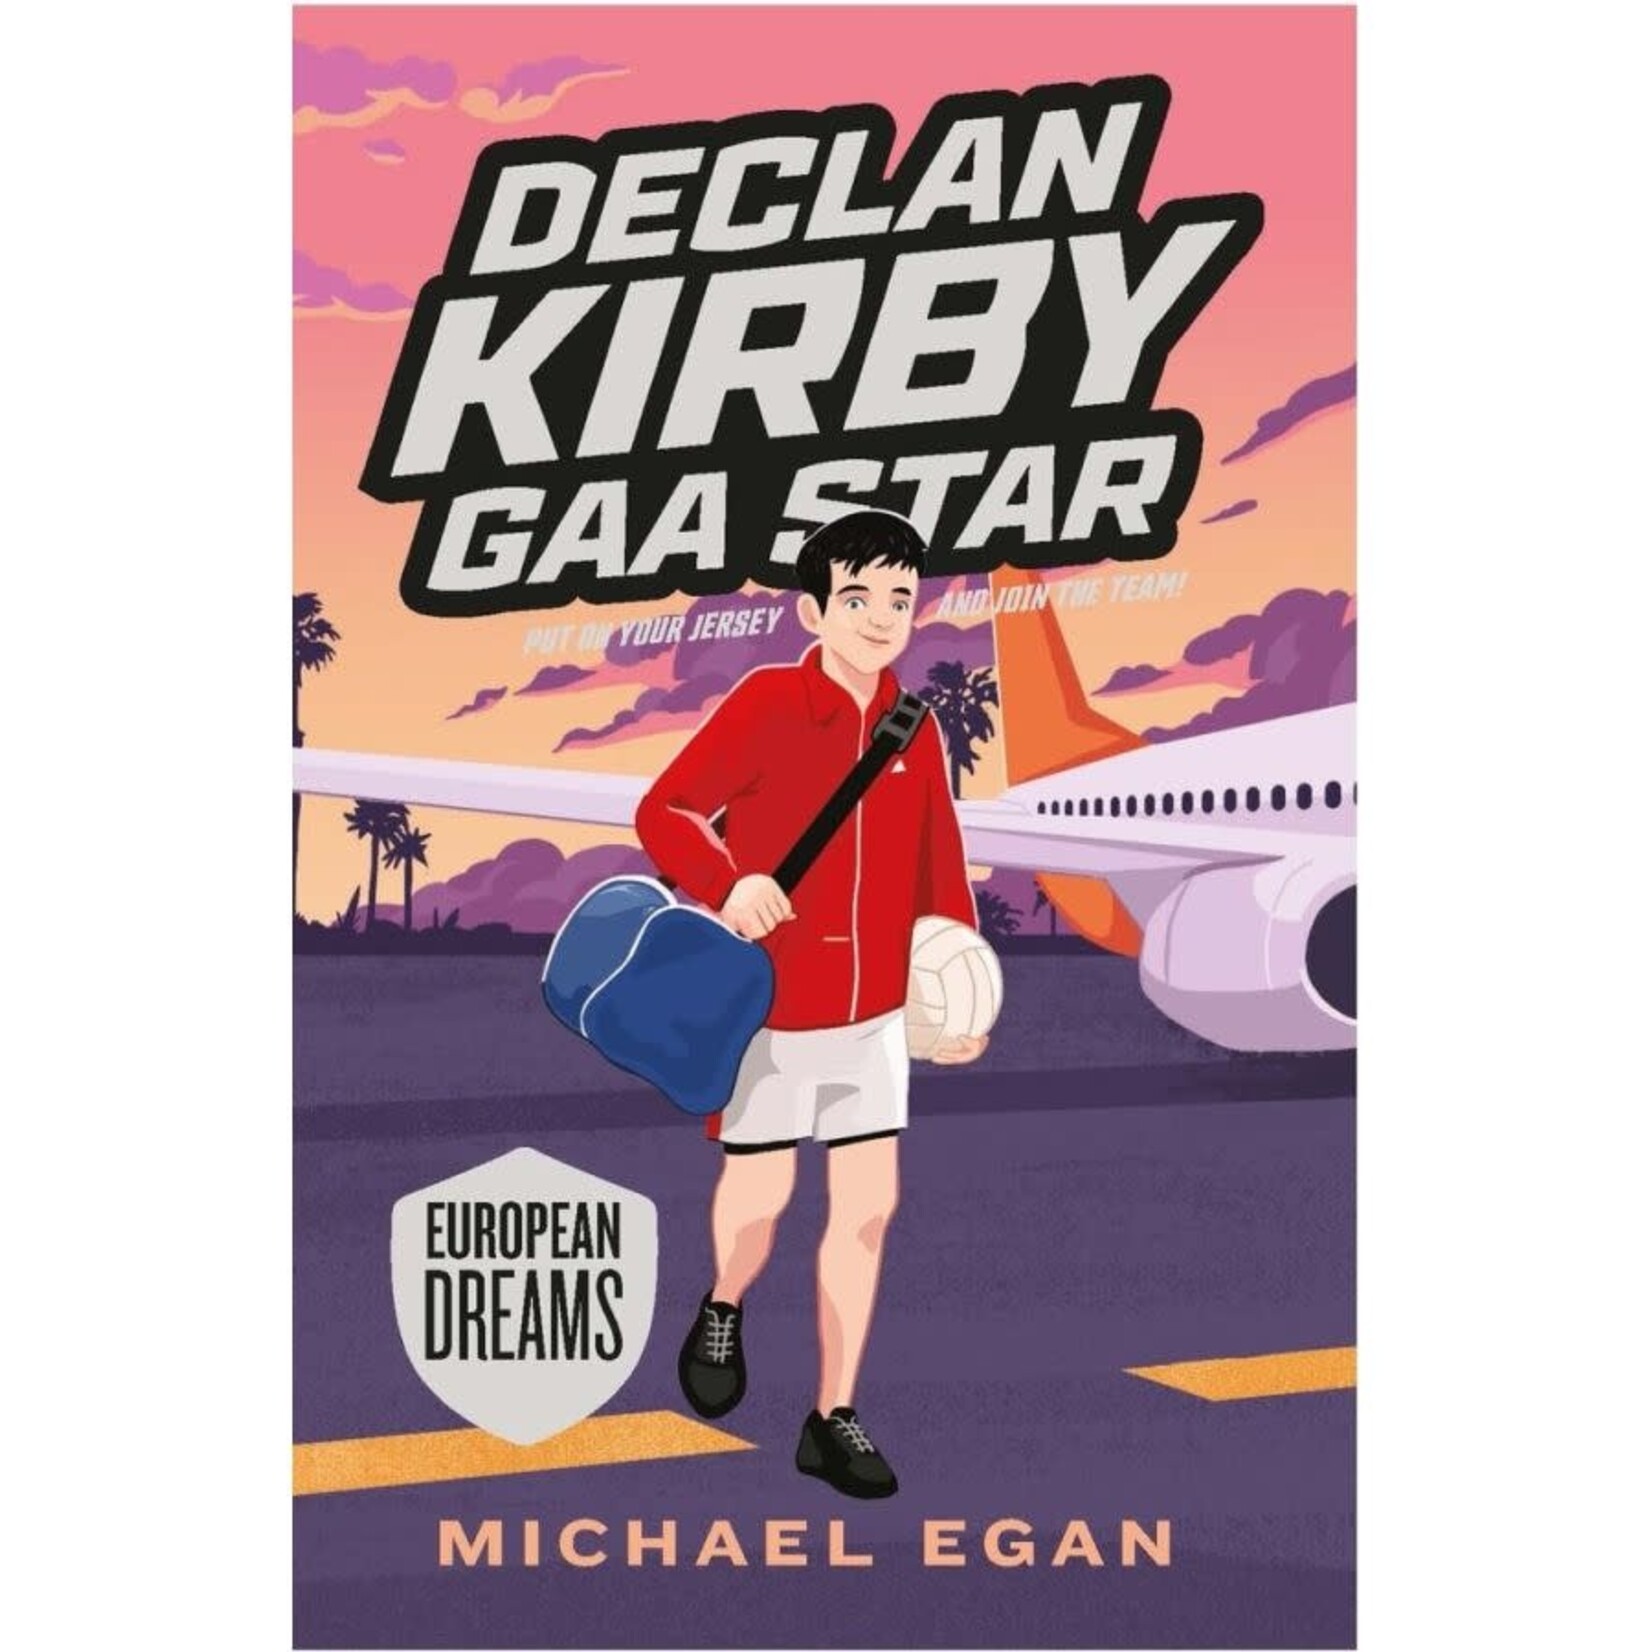 Celtic Books "Declan Kirby GAA Star: European Dreams"